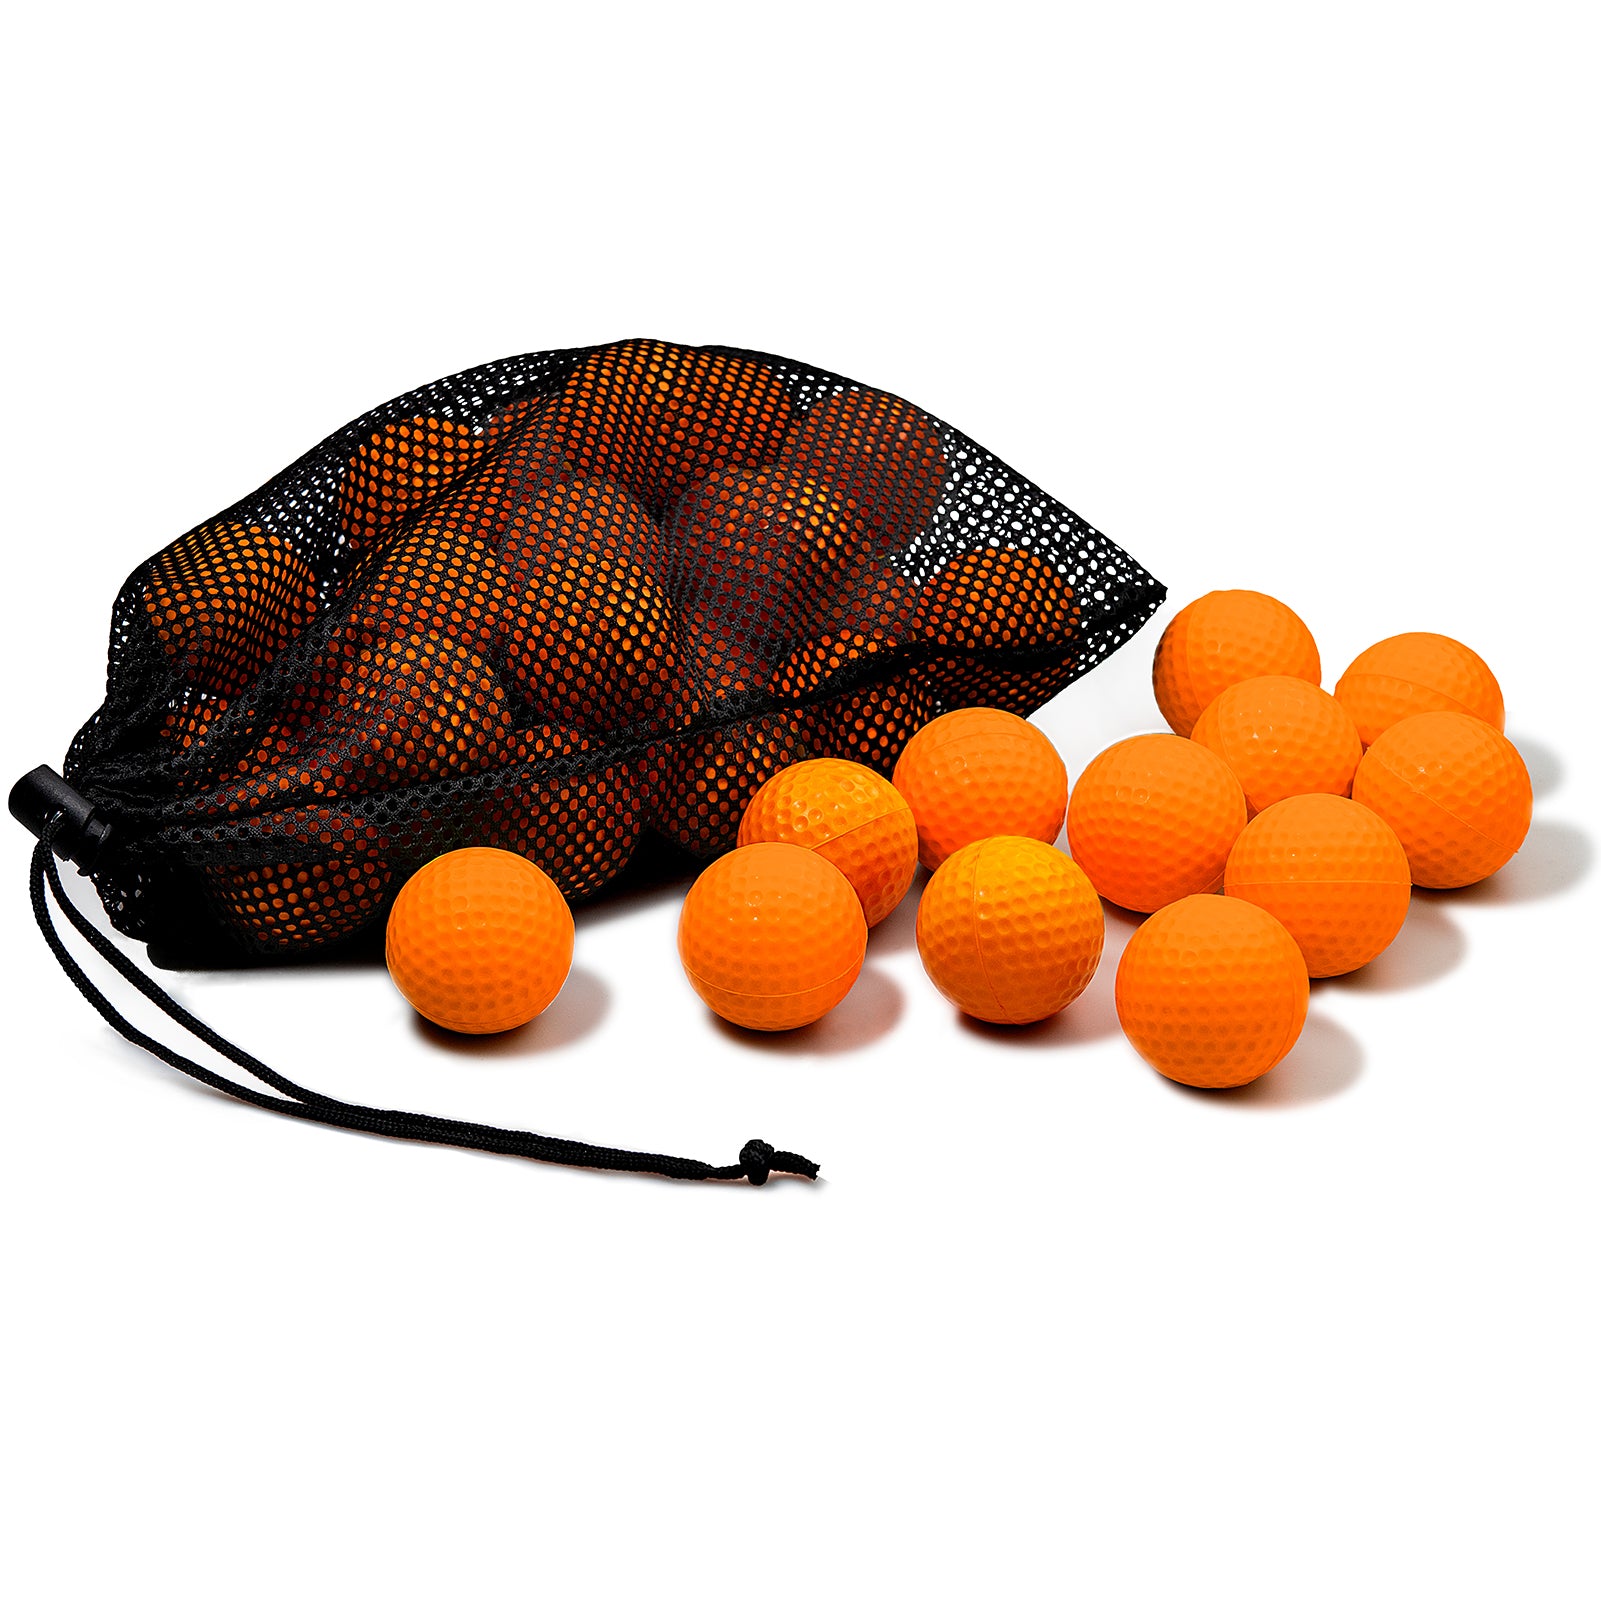 Foam Golf Practice Balls, 12 Pack or 32 Pack, GB02